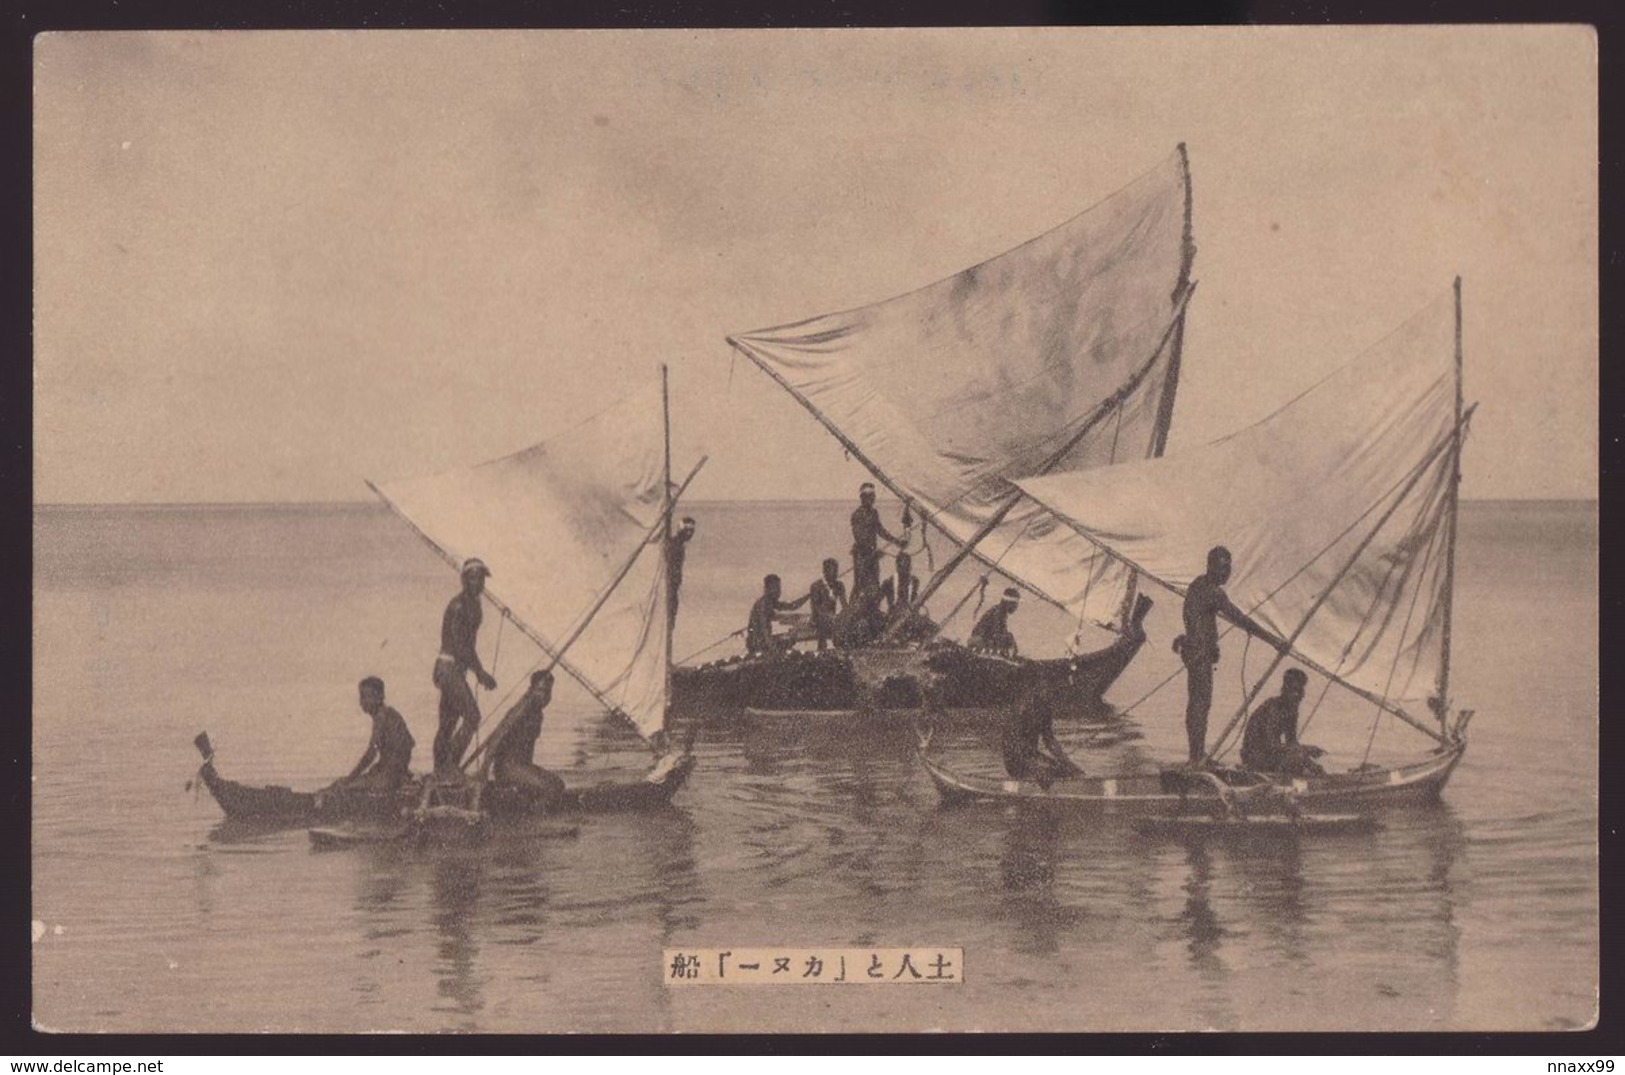 Saipan - Native Peoples On Their Canoes, Saipan Island, Japan's Vintage Postcard - Northern Mariana Islands